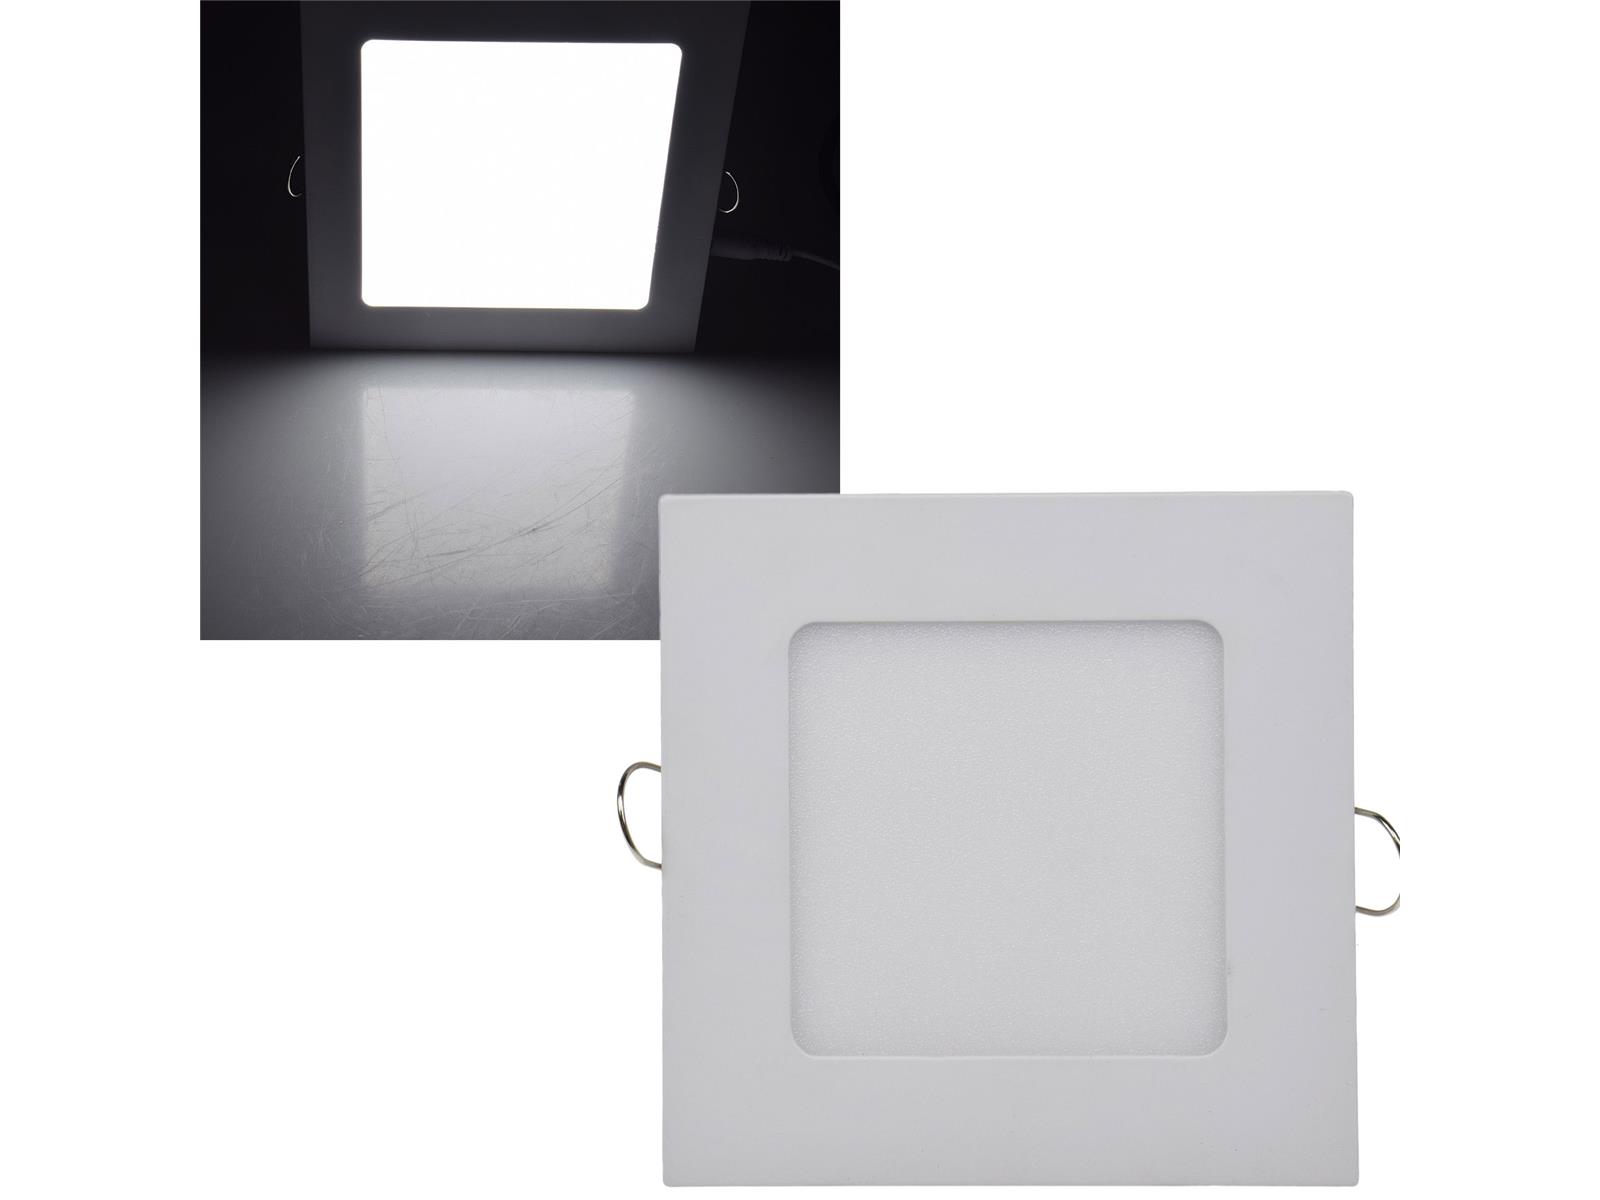 LED Licht-Panel "QCP-12Q", 12x12cm230V, 6W, 510 Lumen, 4200K / neutralweiß